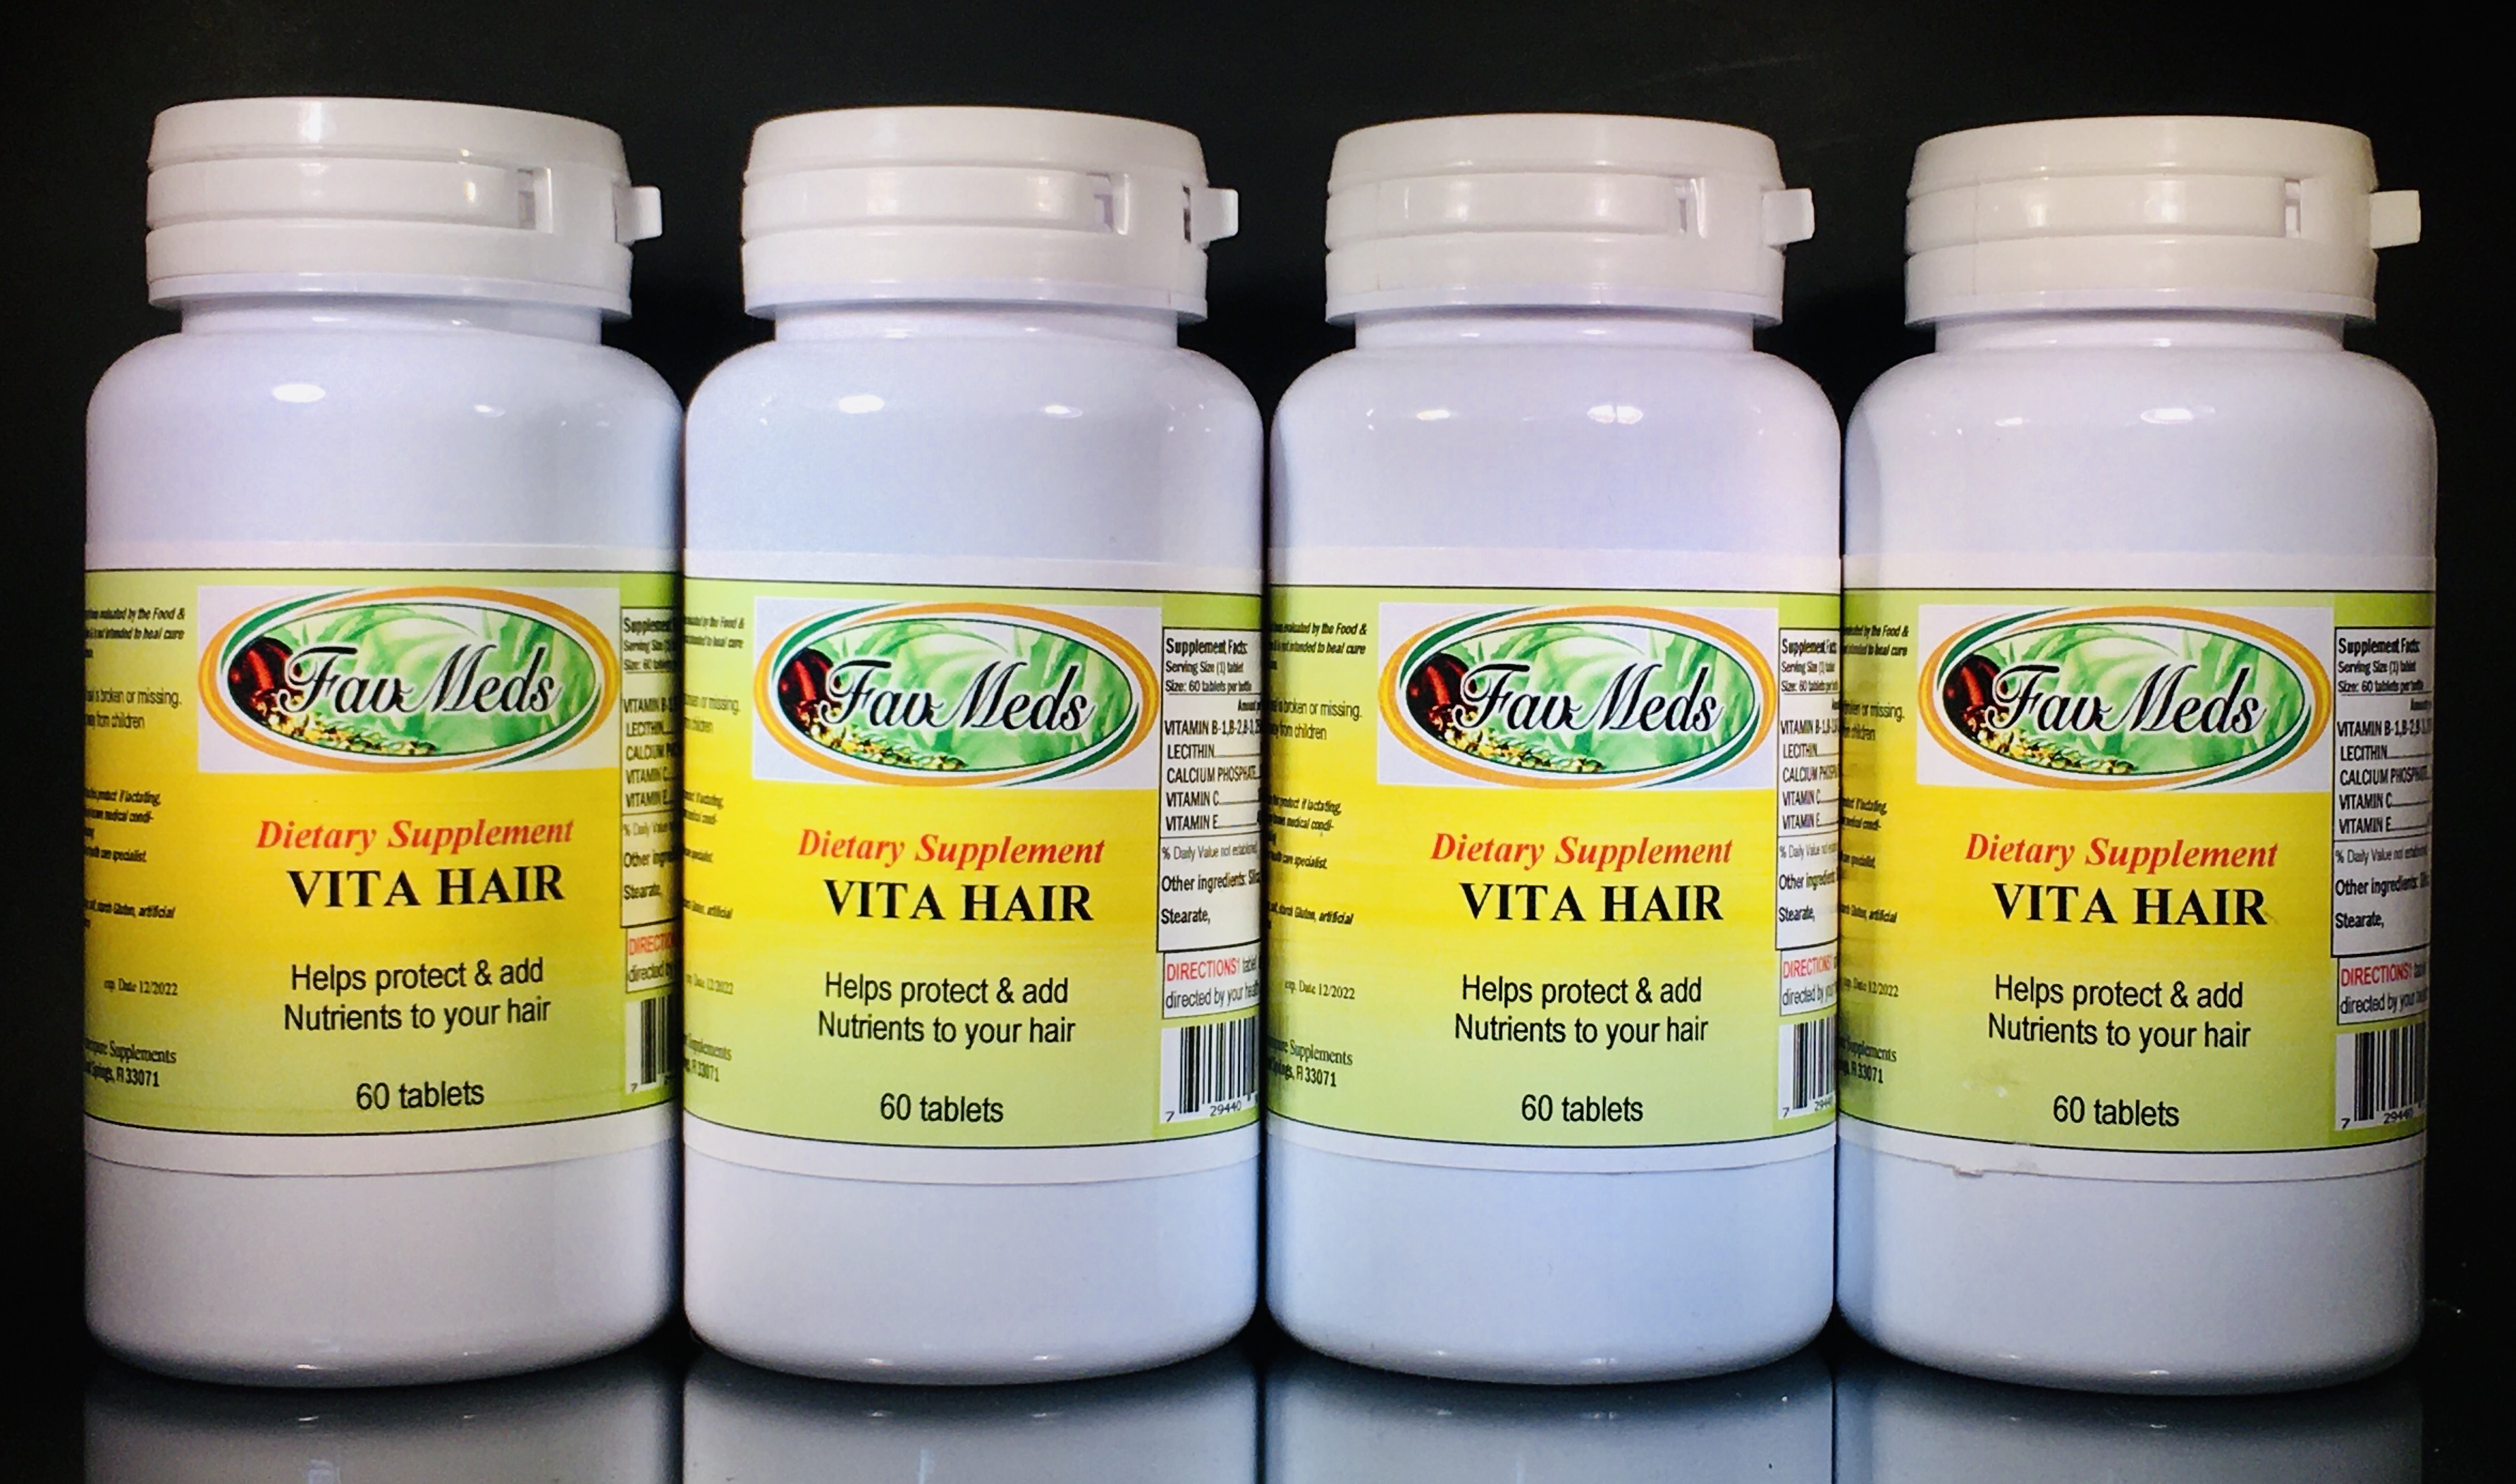 Vita Hair multivitamins - 240 (4x60) tablets